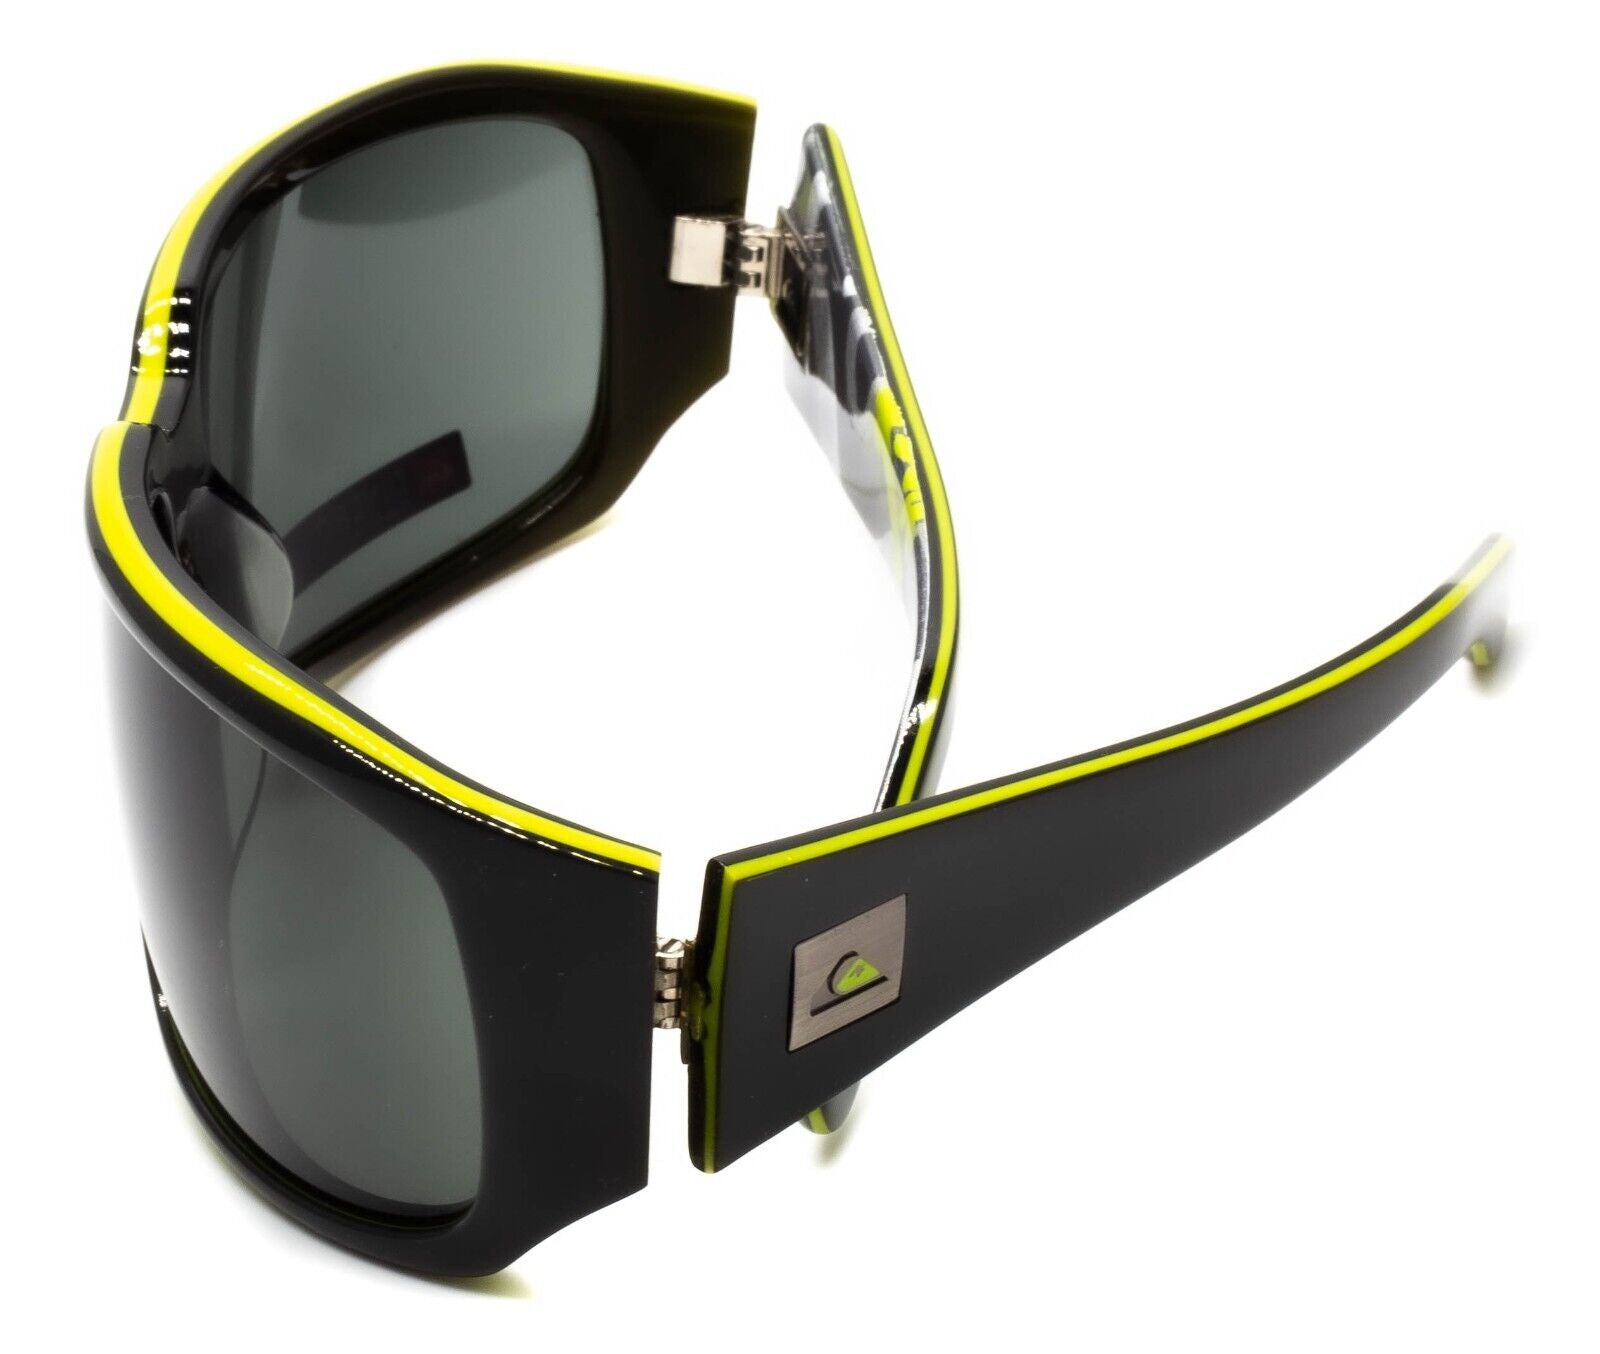 QUIKSILVER DINERO EQS1104/XSSG UV CAT 3 64mm Sunglasses Shades Glasses  Eyewear - GGV Eyewear